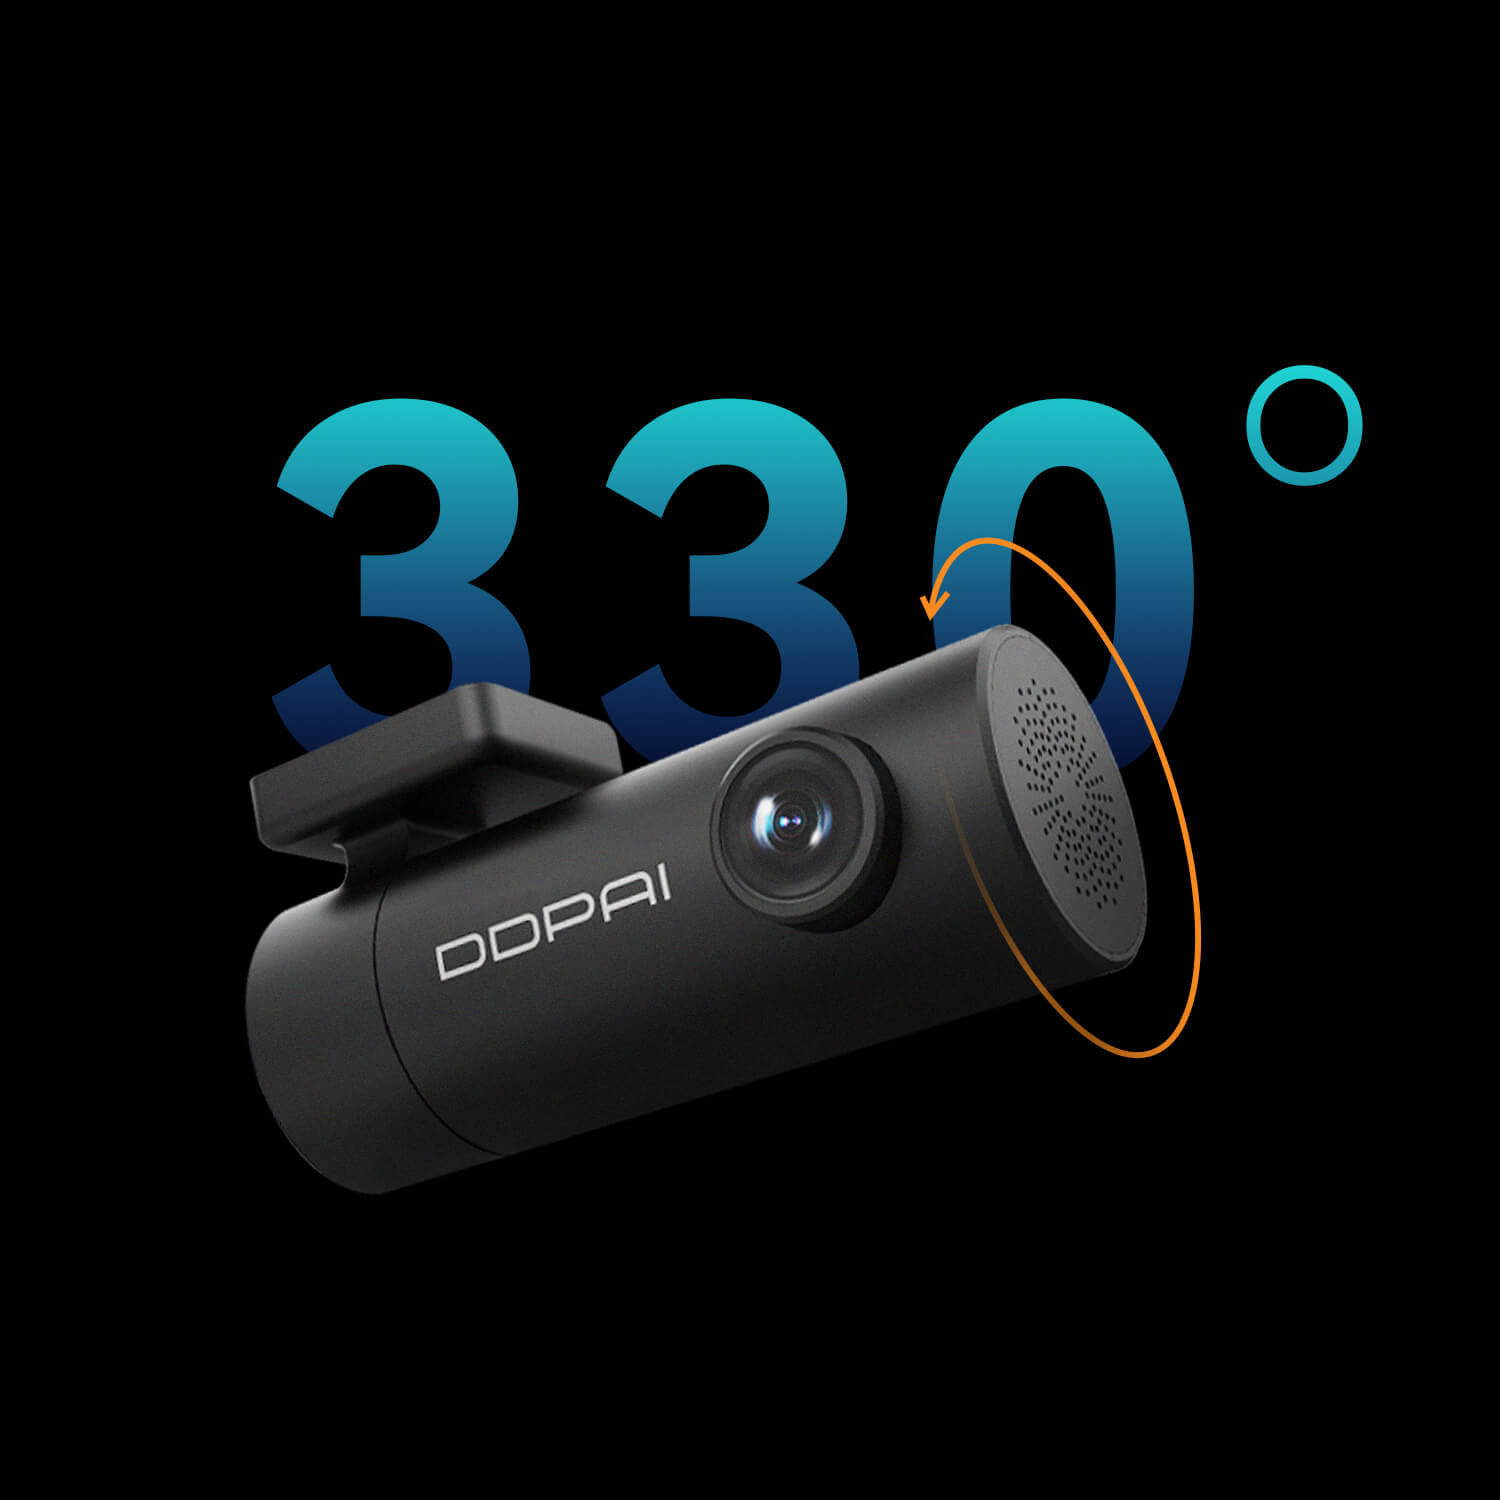 330-degree rotatable lens